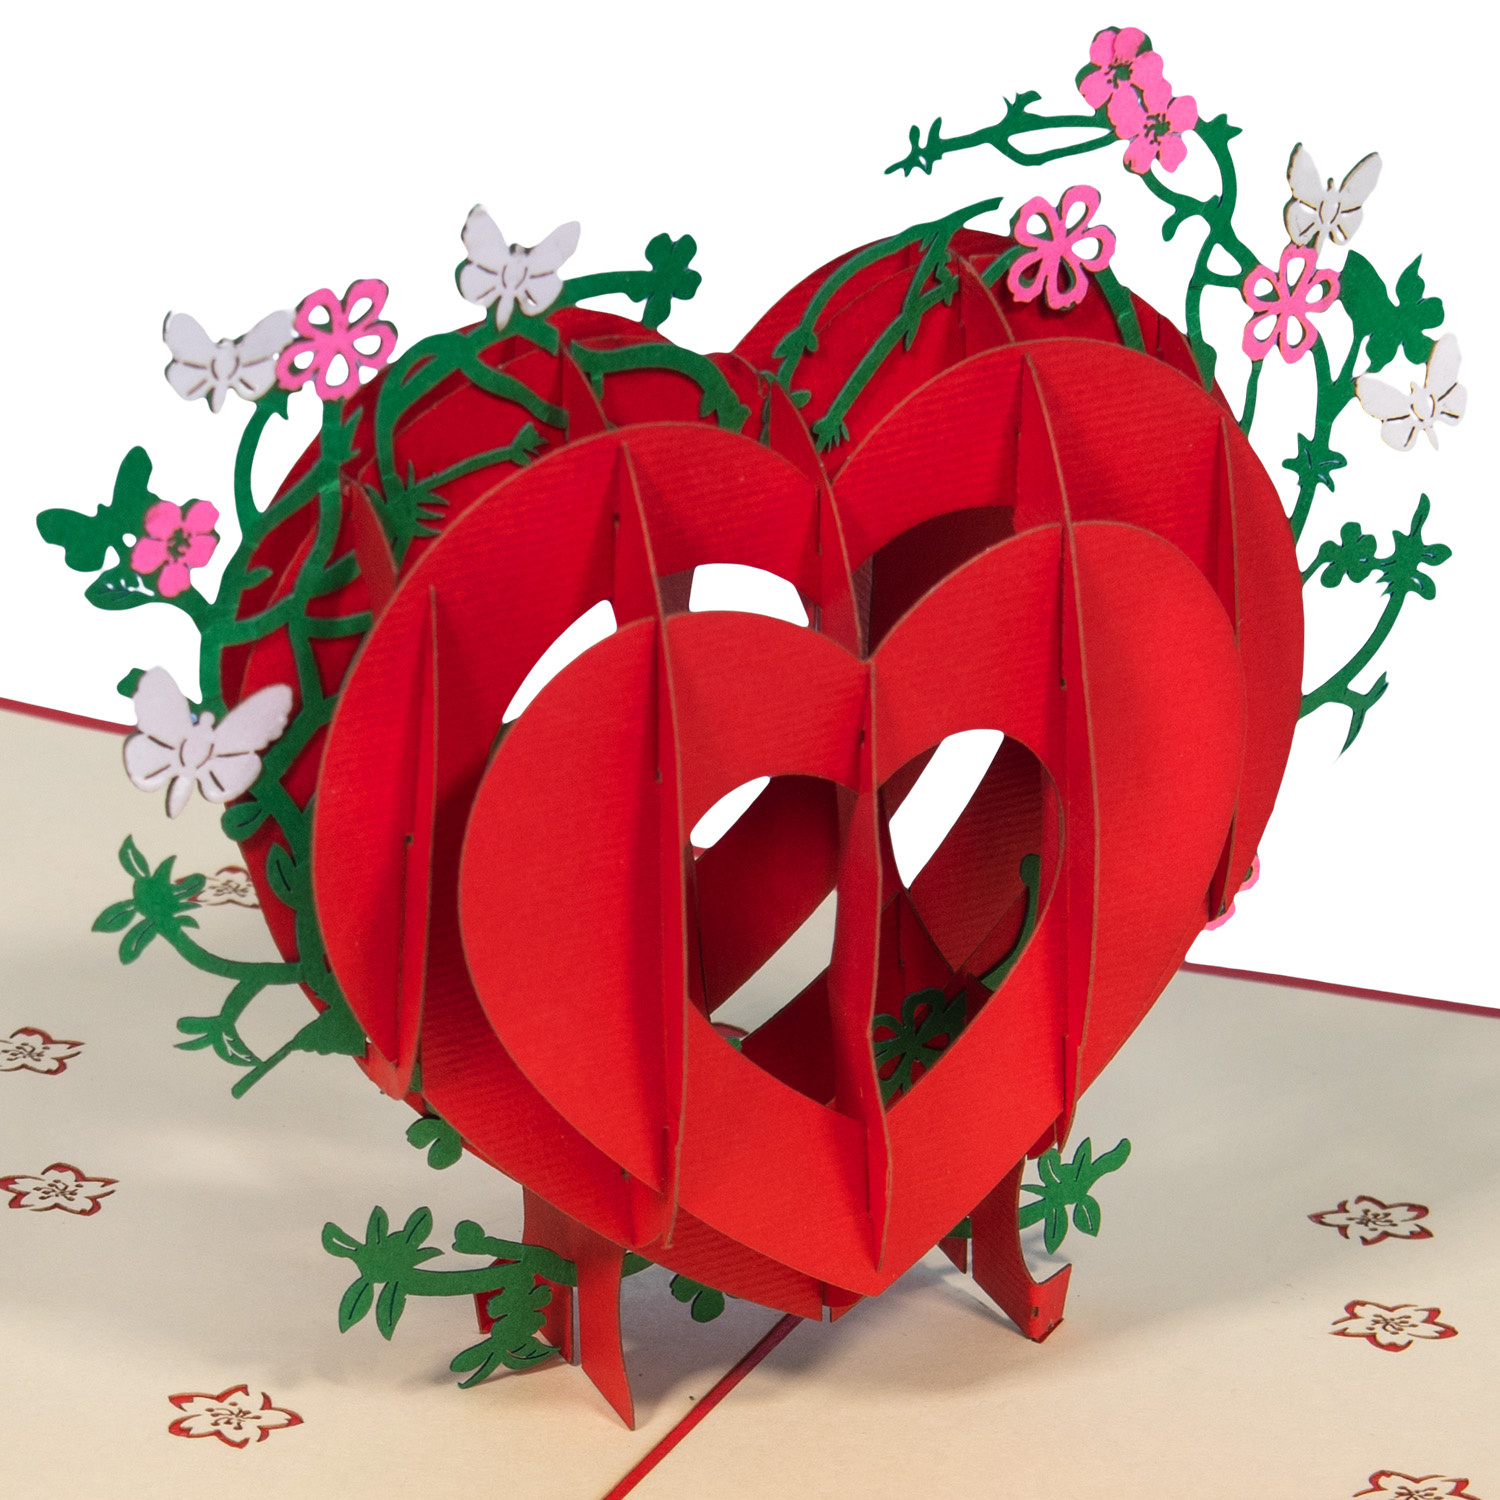 LINPOPUP LINPOPUP Pop-Up Card Love - Valentine's Day, 3D Heart Card, Birthday Card for Women & Men, Greeting Card with Heart - Love Card Wedding Anniversary, Anniversary & Mother's Day, Heart Card, N6